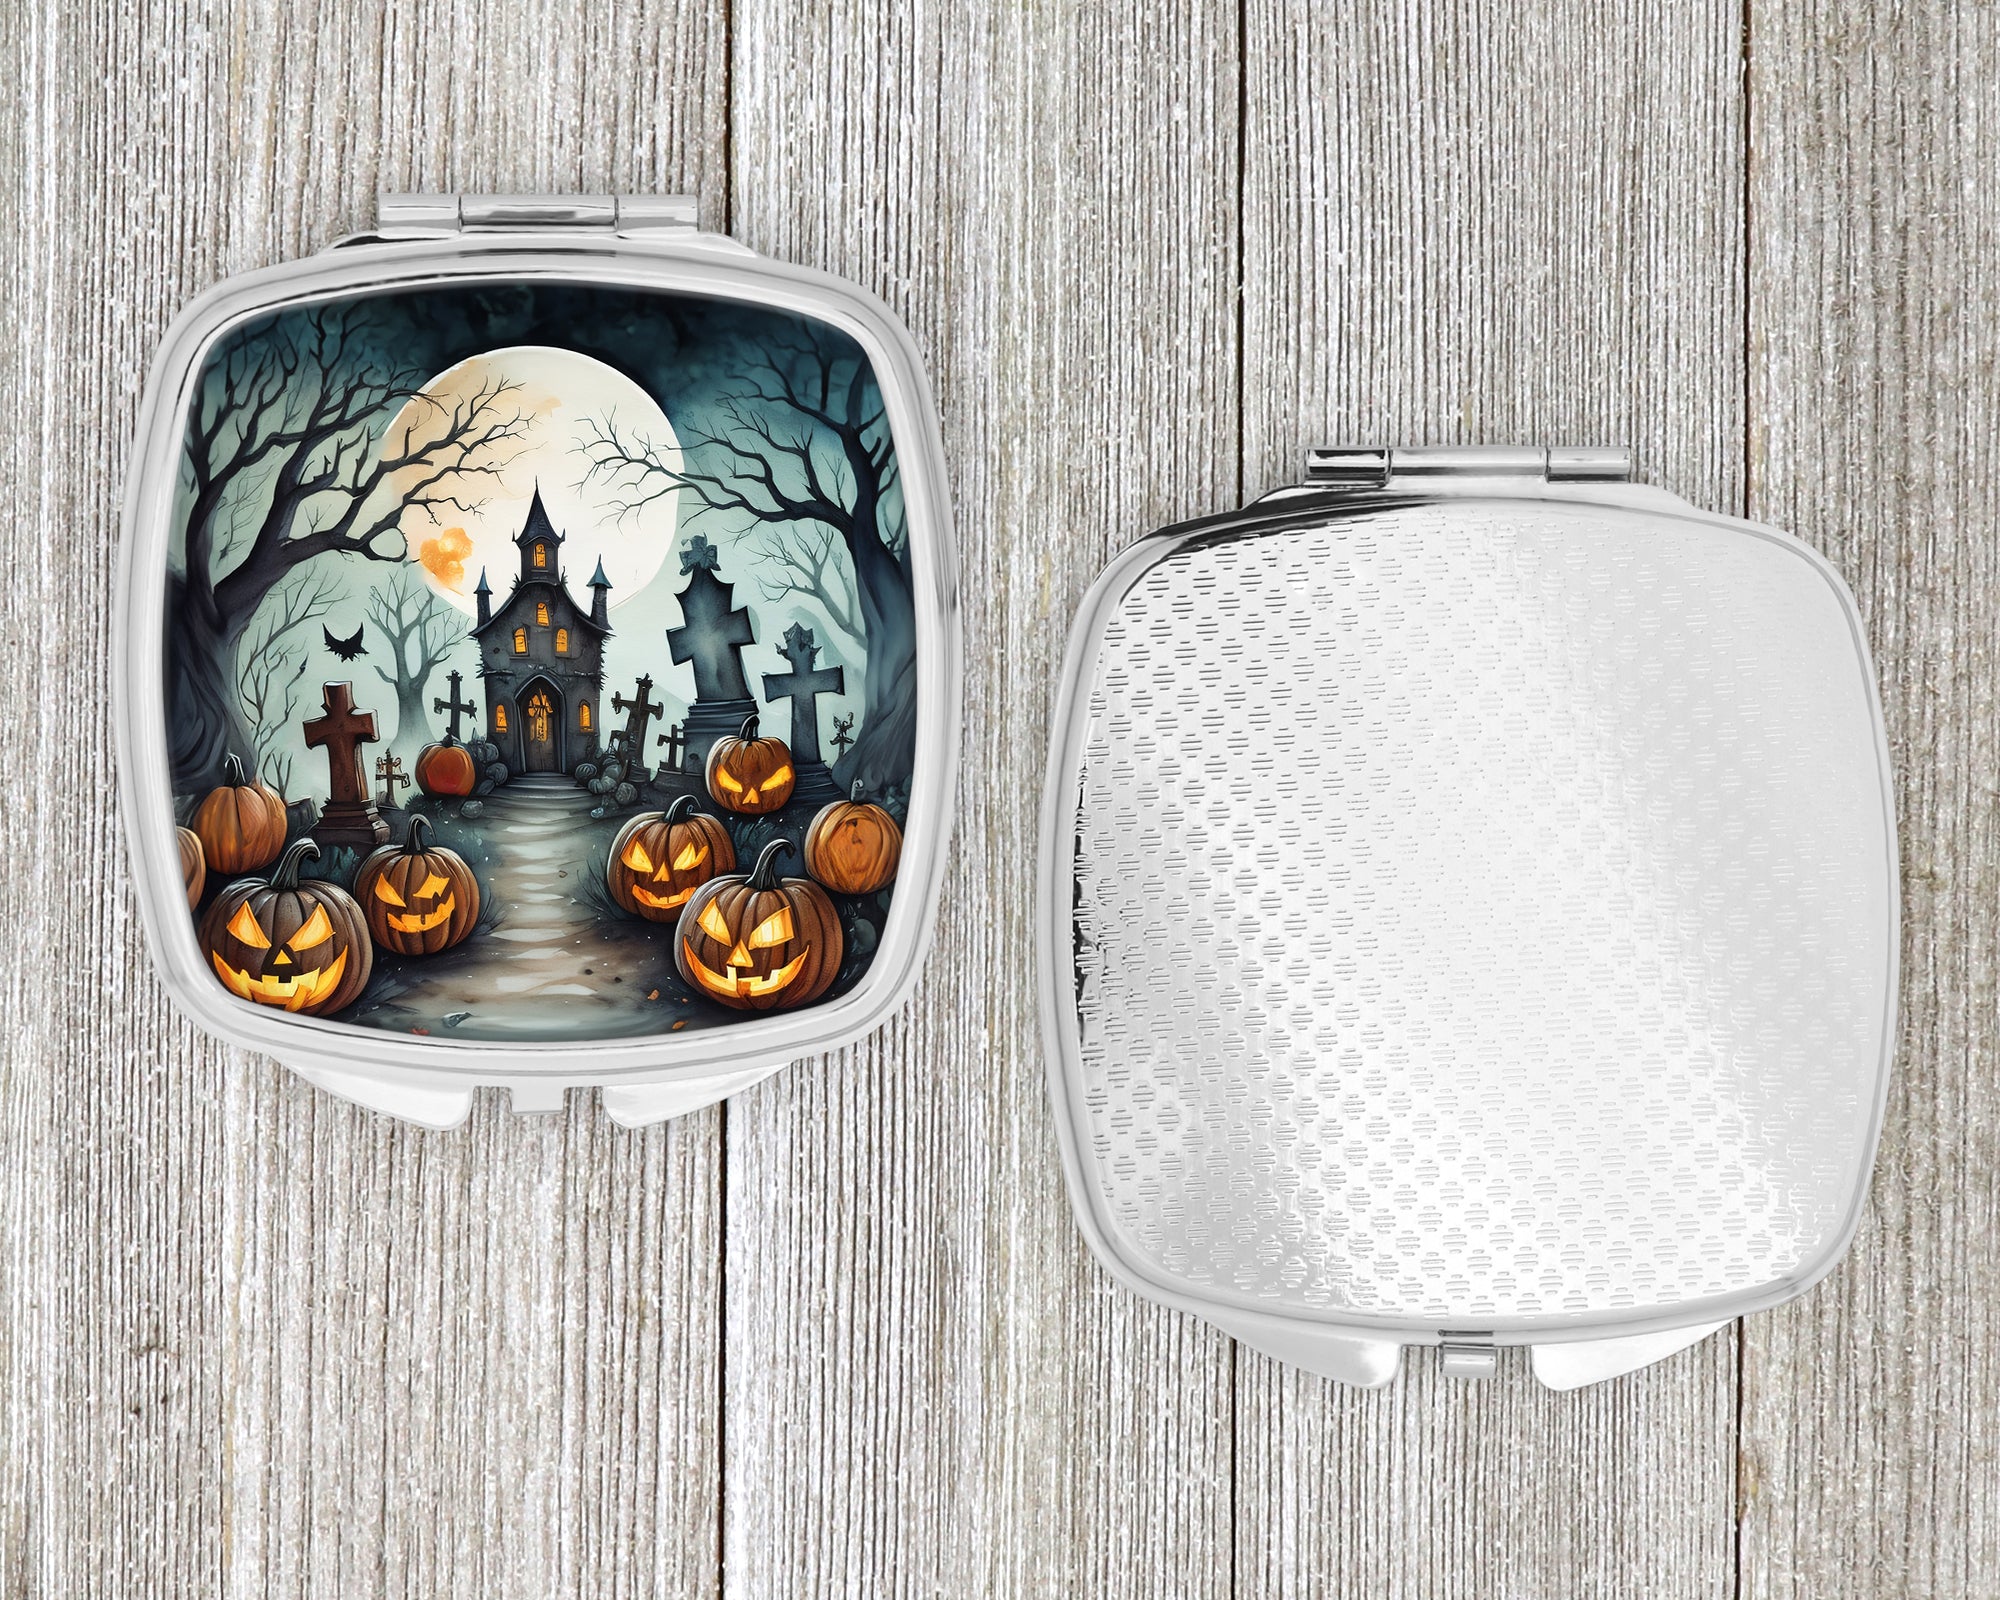 Graveyard Spooky Halloween Compact Mirror